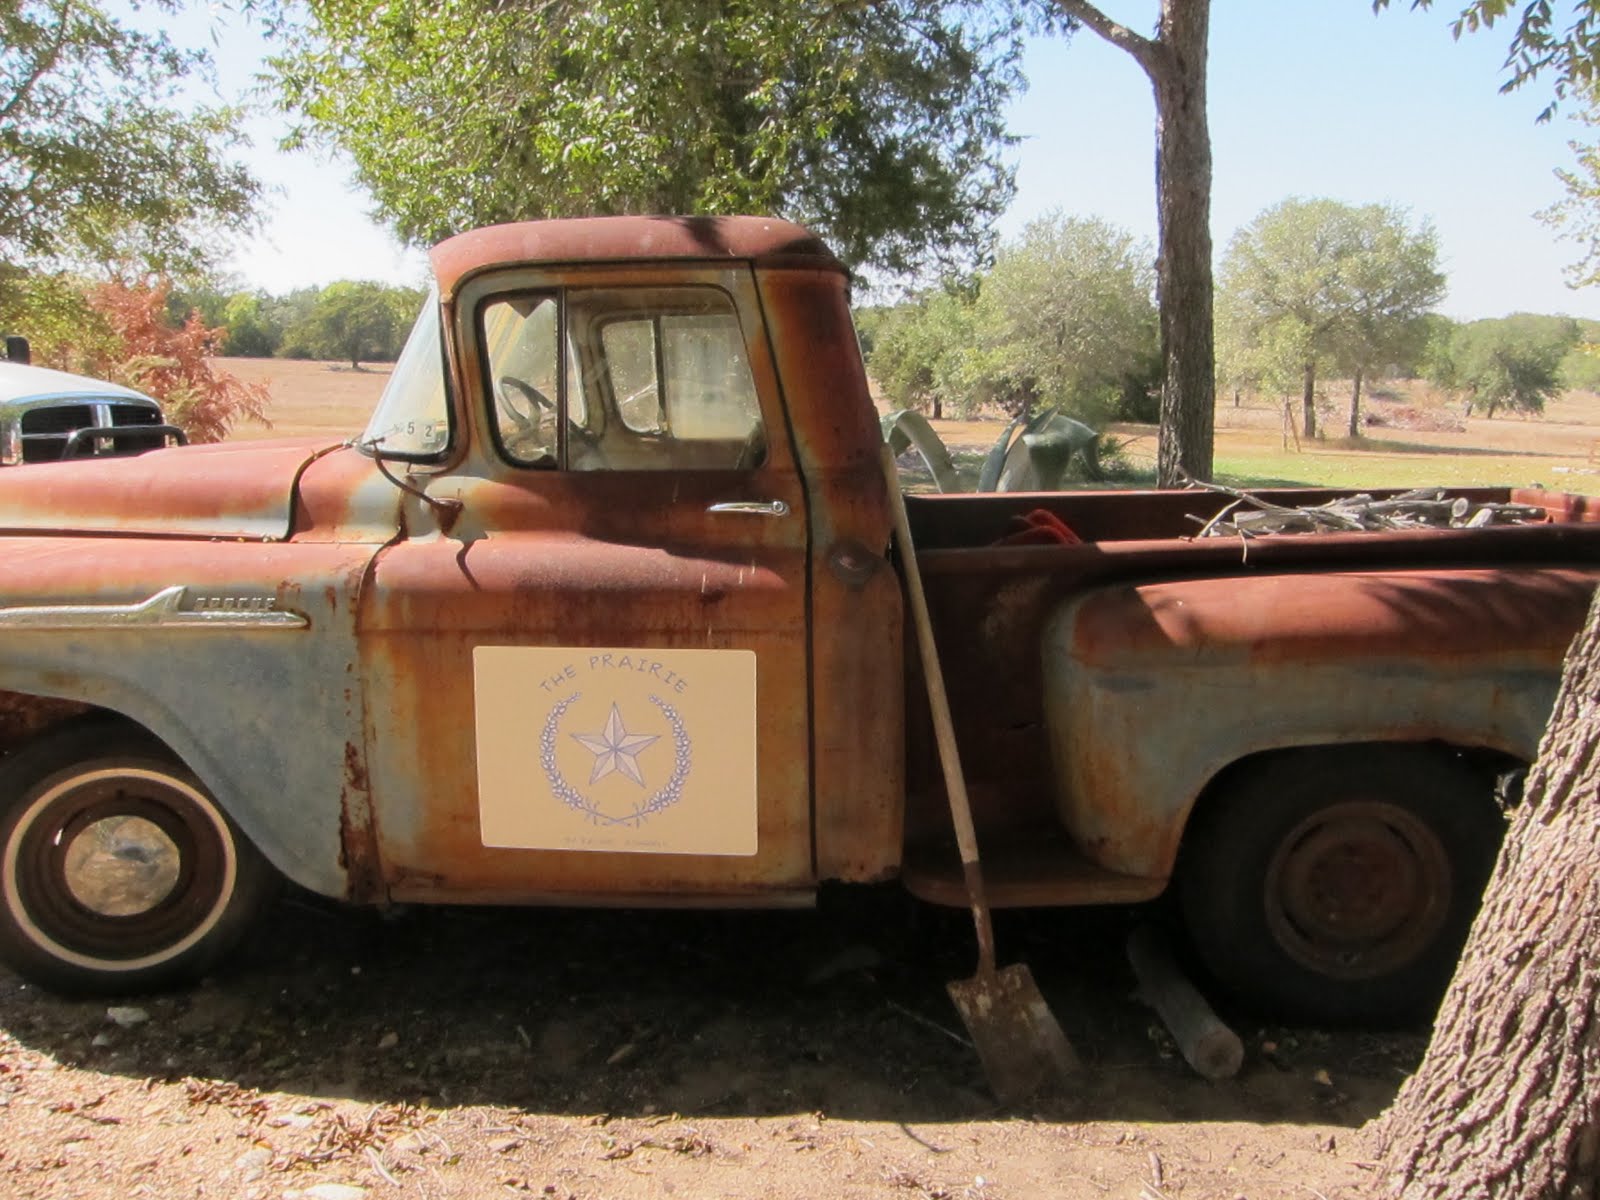 Vintage truck at The Prairie by Rachel Ashwell.